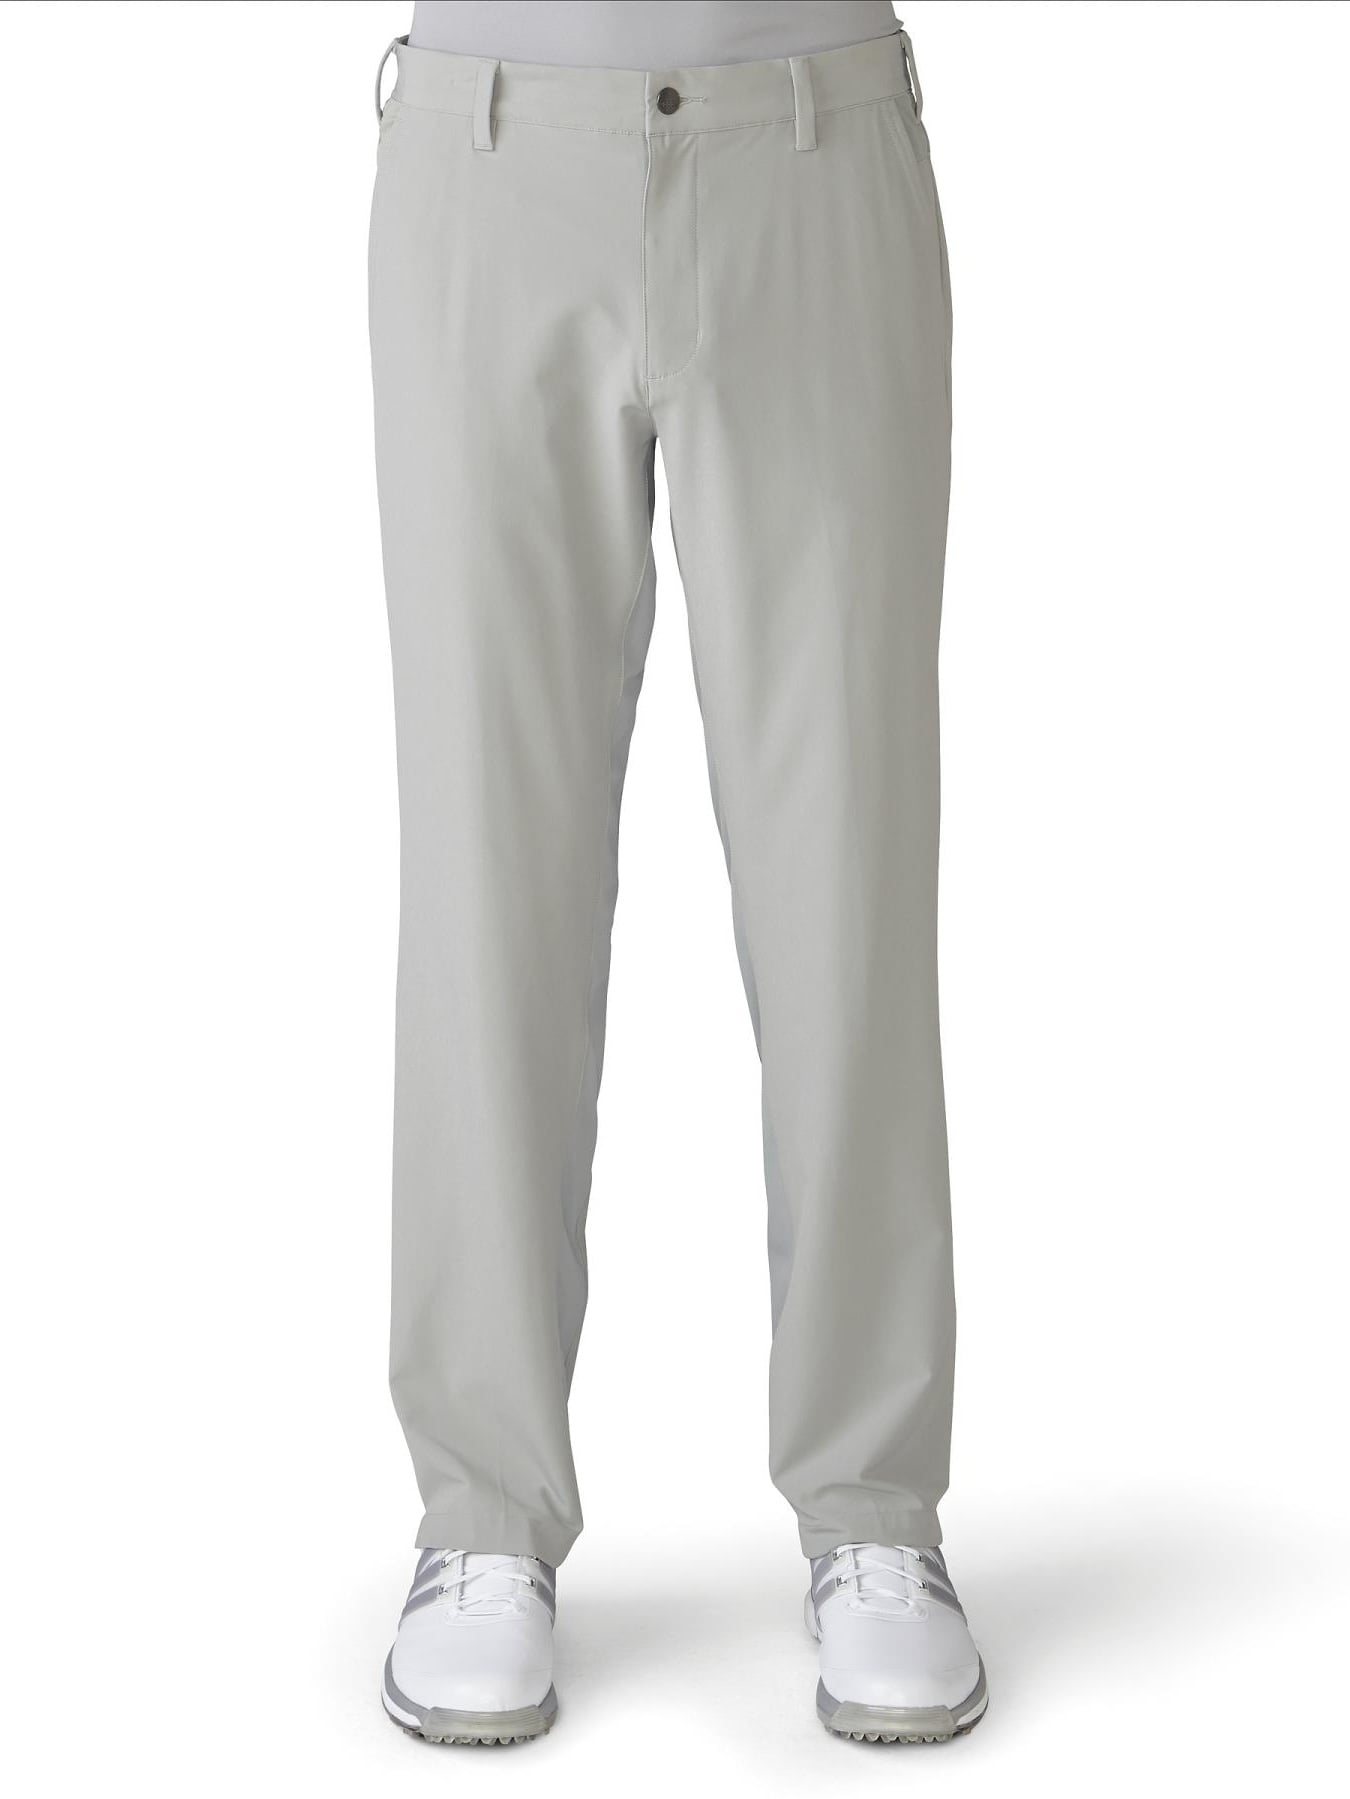 2016 Adidas Ultimate Airflow Pants Mens Golf Trousers